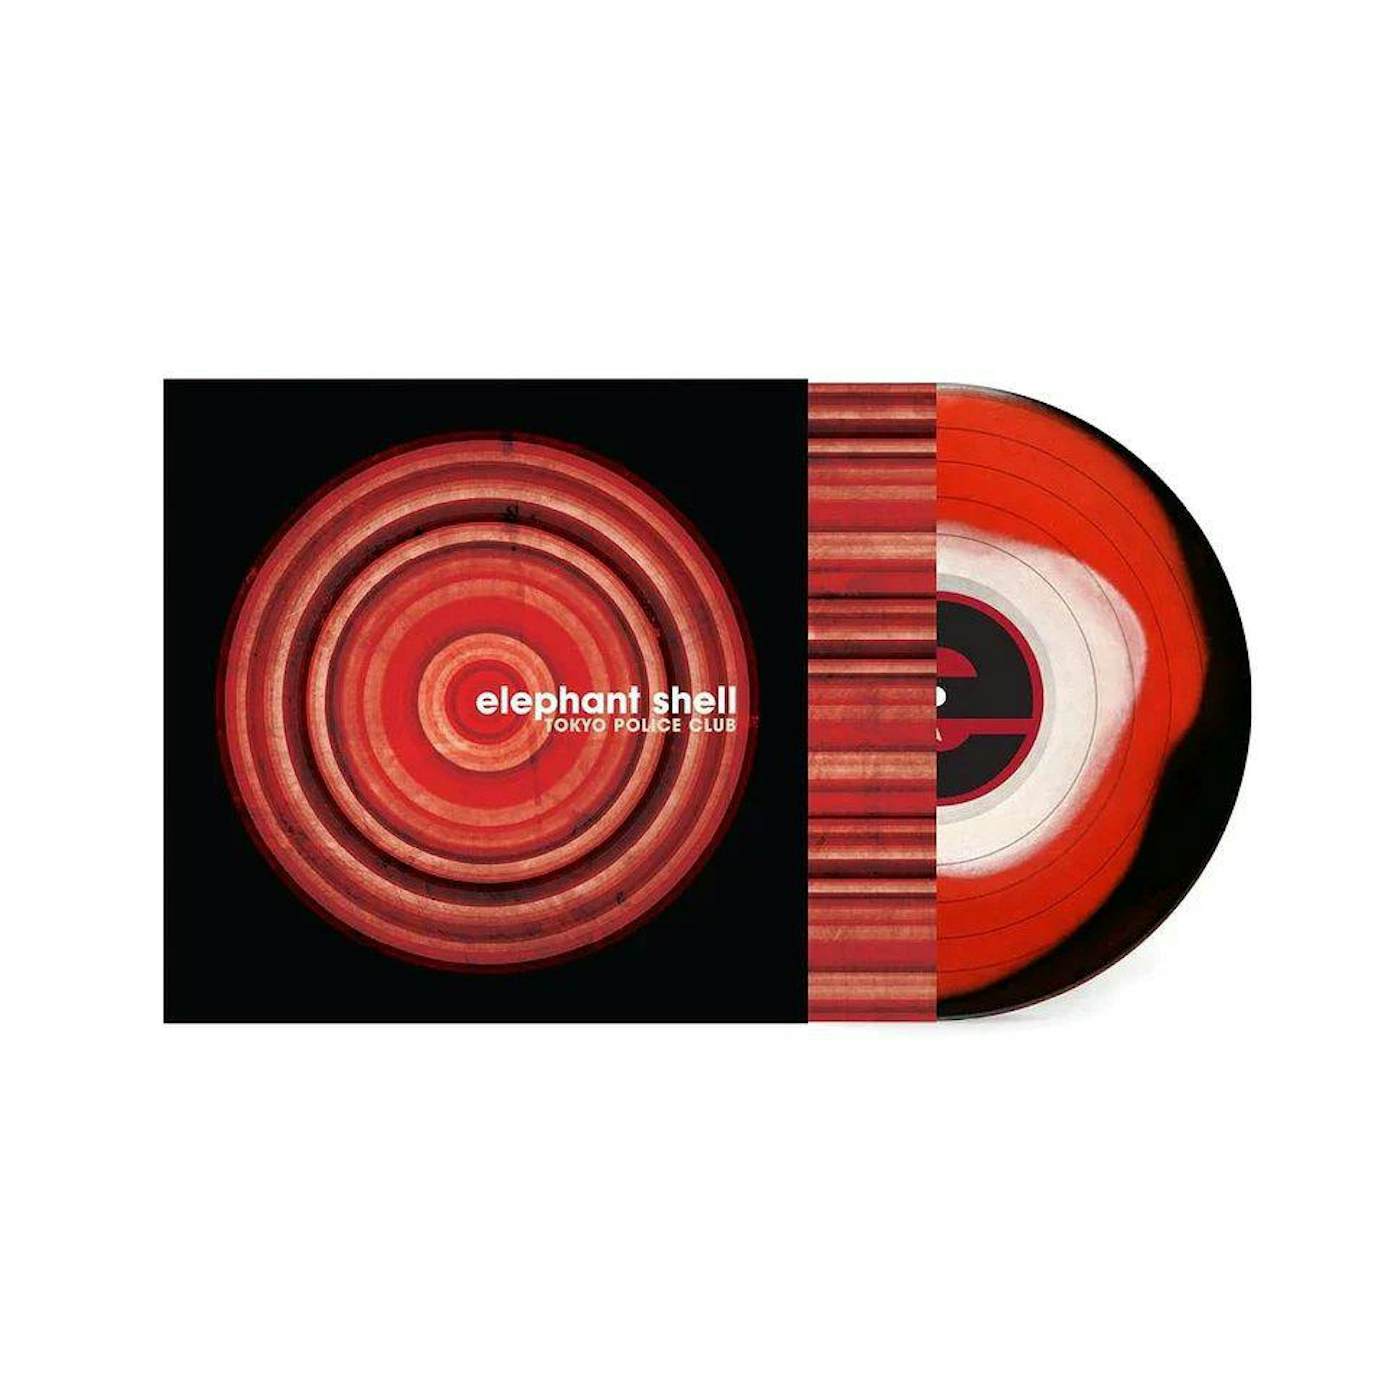 Tokyo Police Club Elephant Shell (Black, Red, & White Tri-color) Vinyl Record